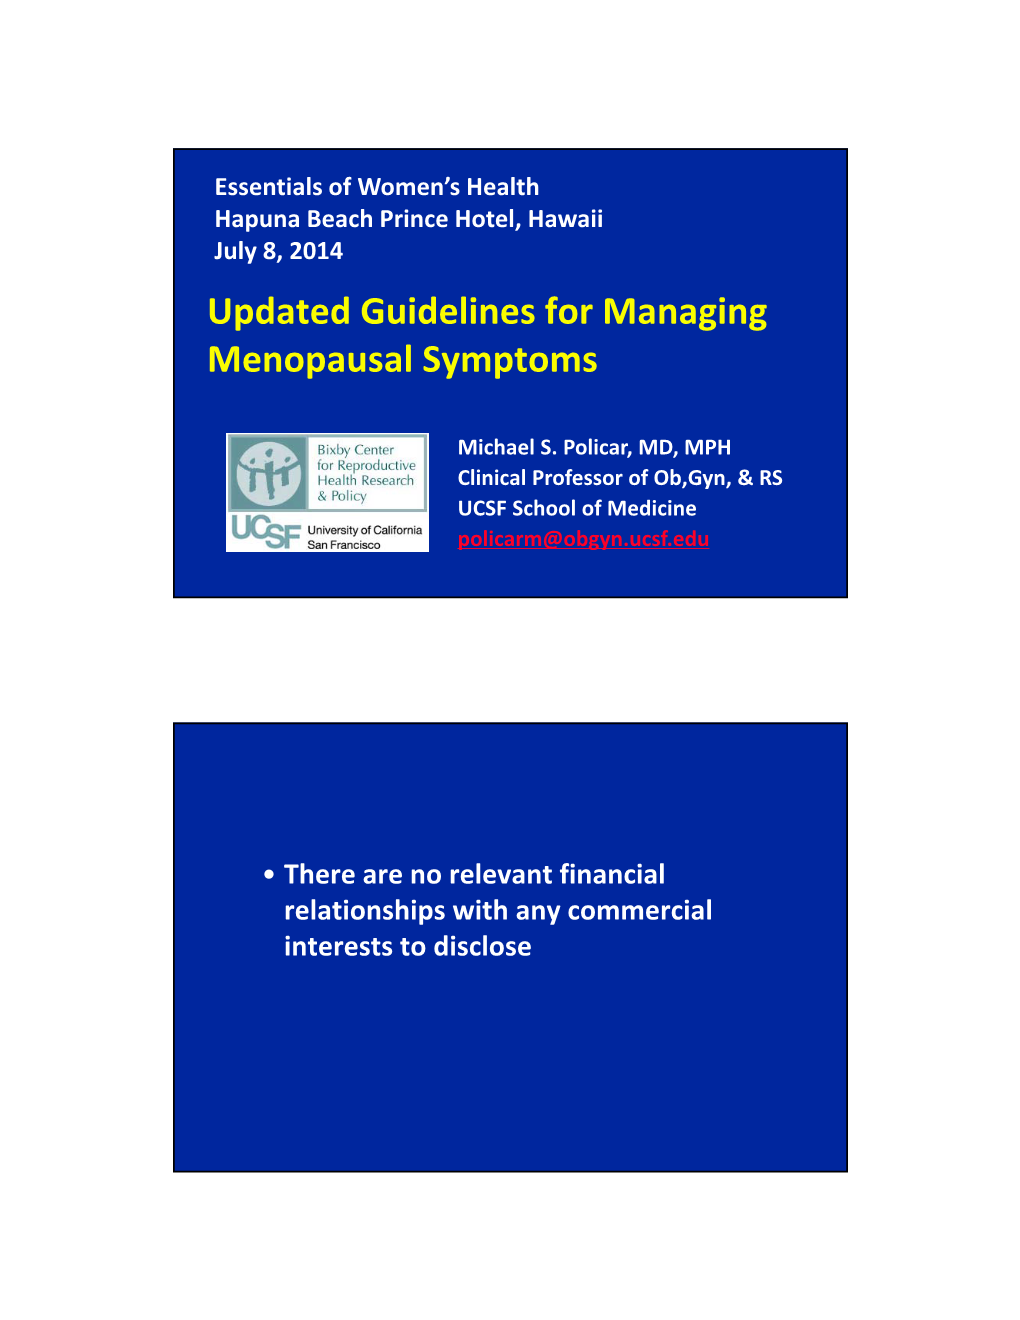 Updated Guidelines for Managing Menopausal Symptoms